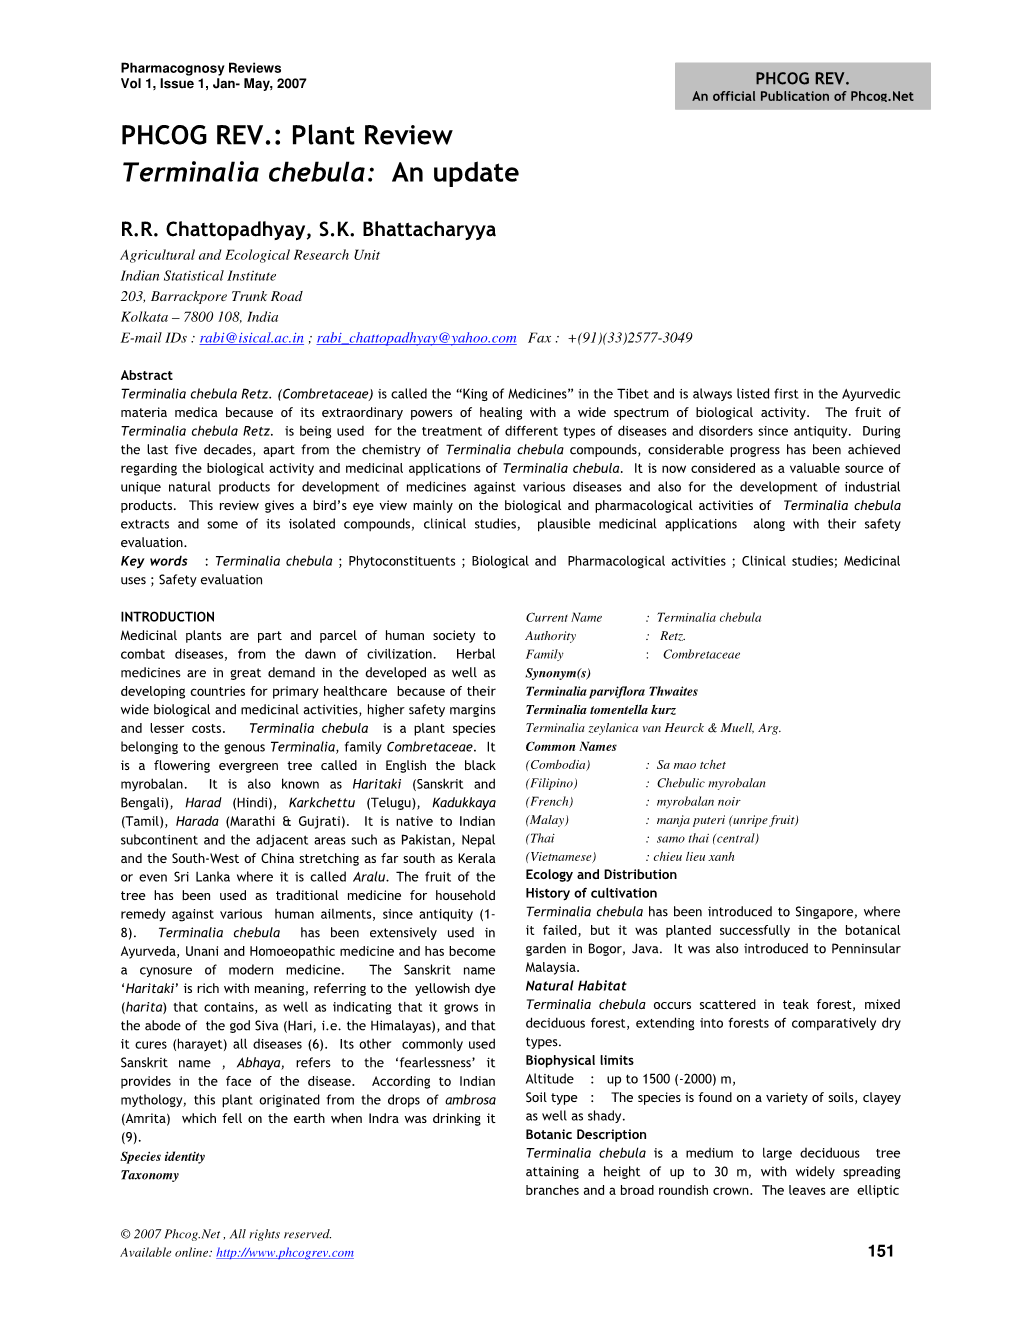 PHCOG REV.: Plant Review Terminalia Chebula: an Update � R.R